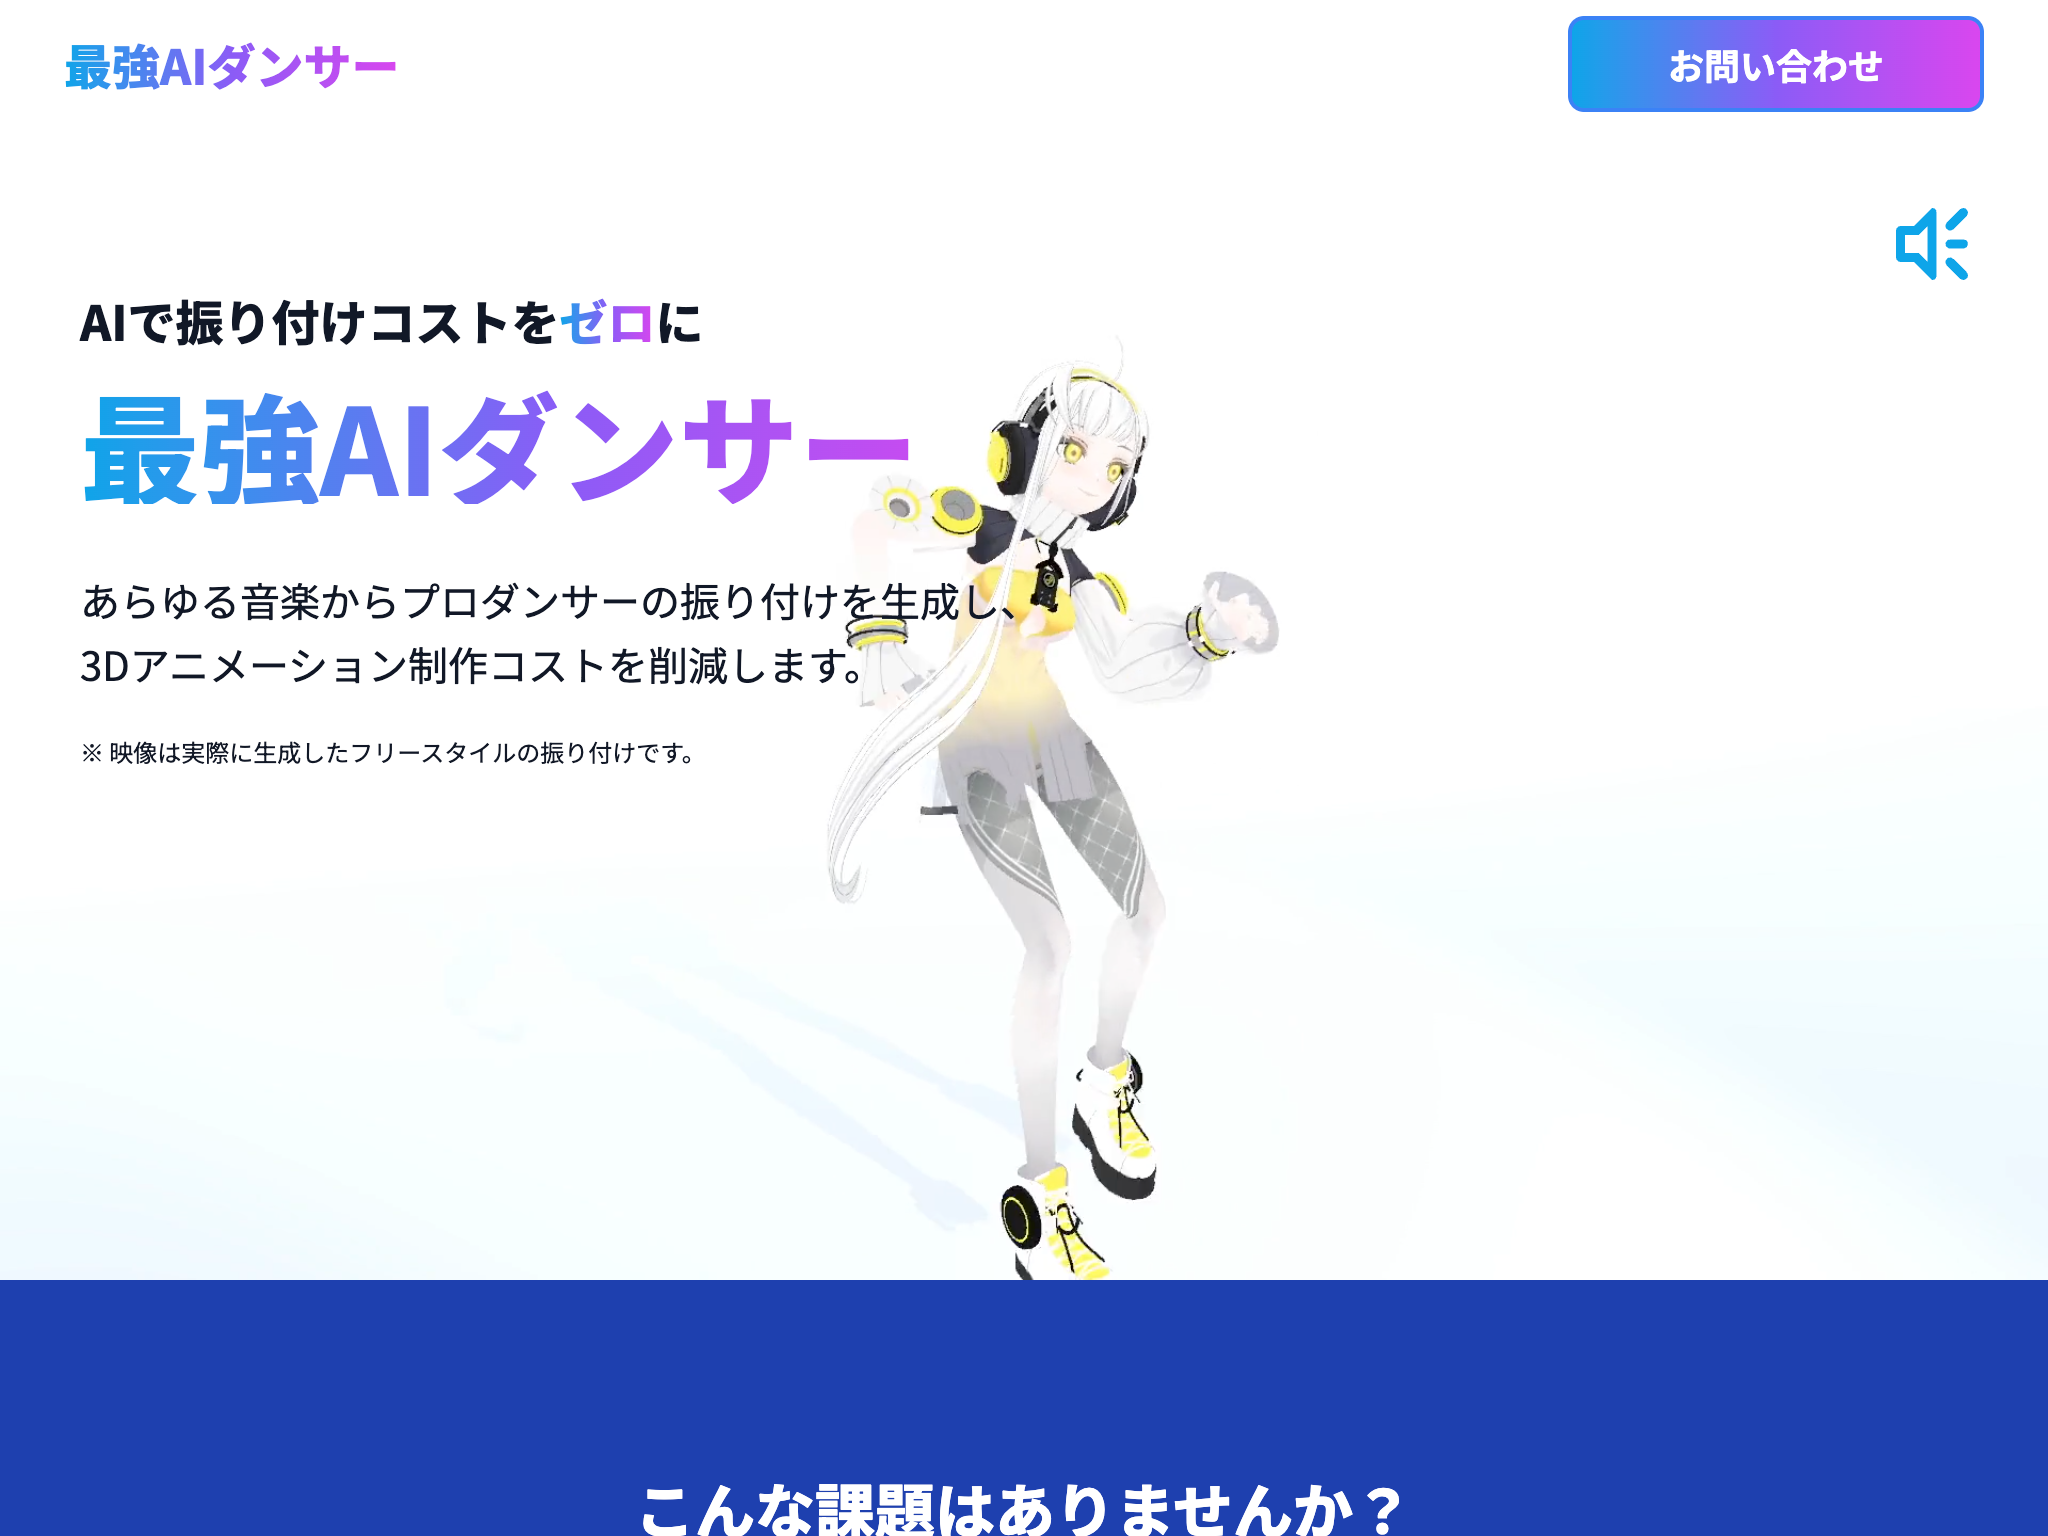 Ultimate AI Dancer